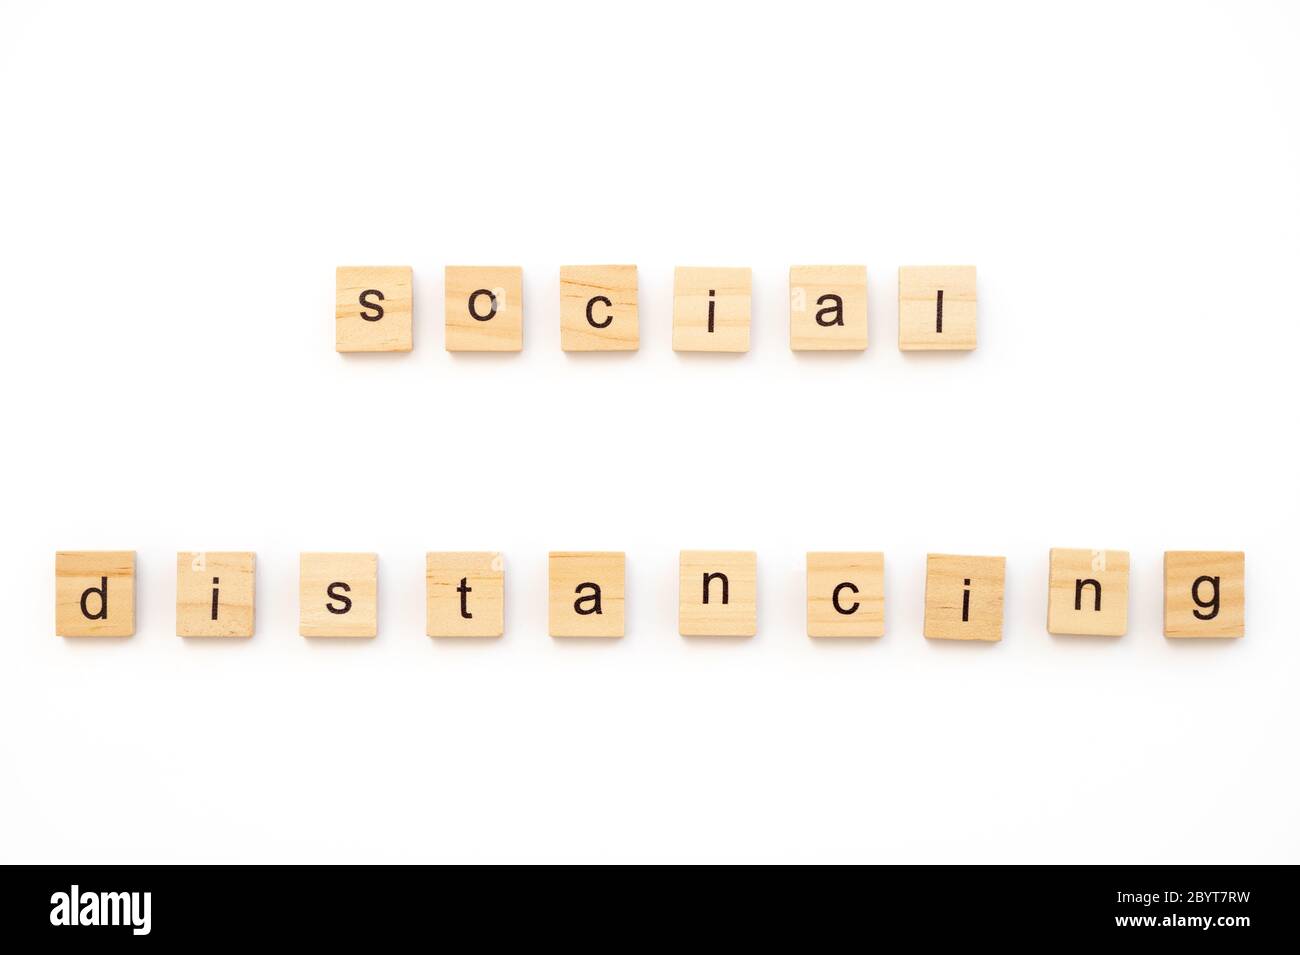 Generic wood scrabble tiles spelling words Social Distancing Stock Photo